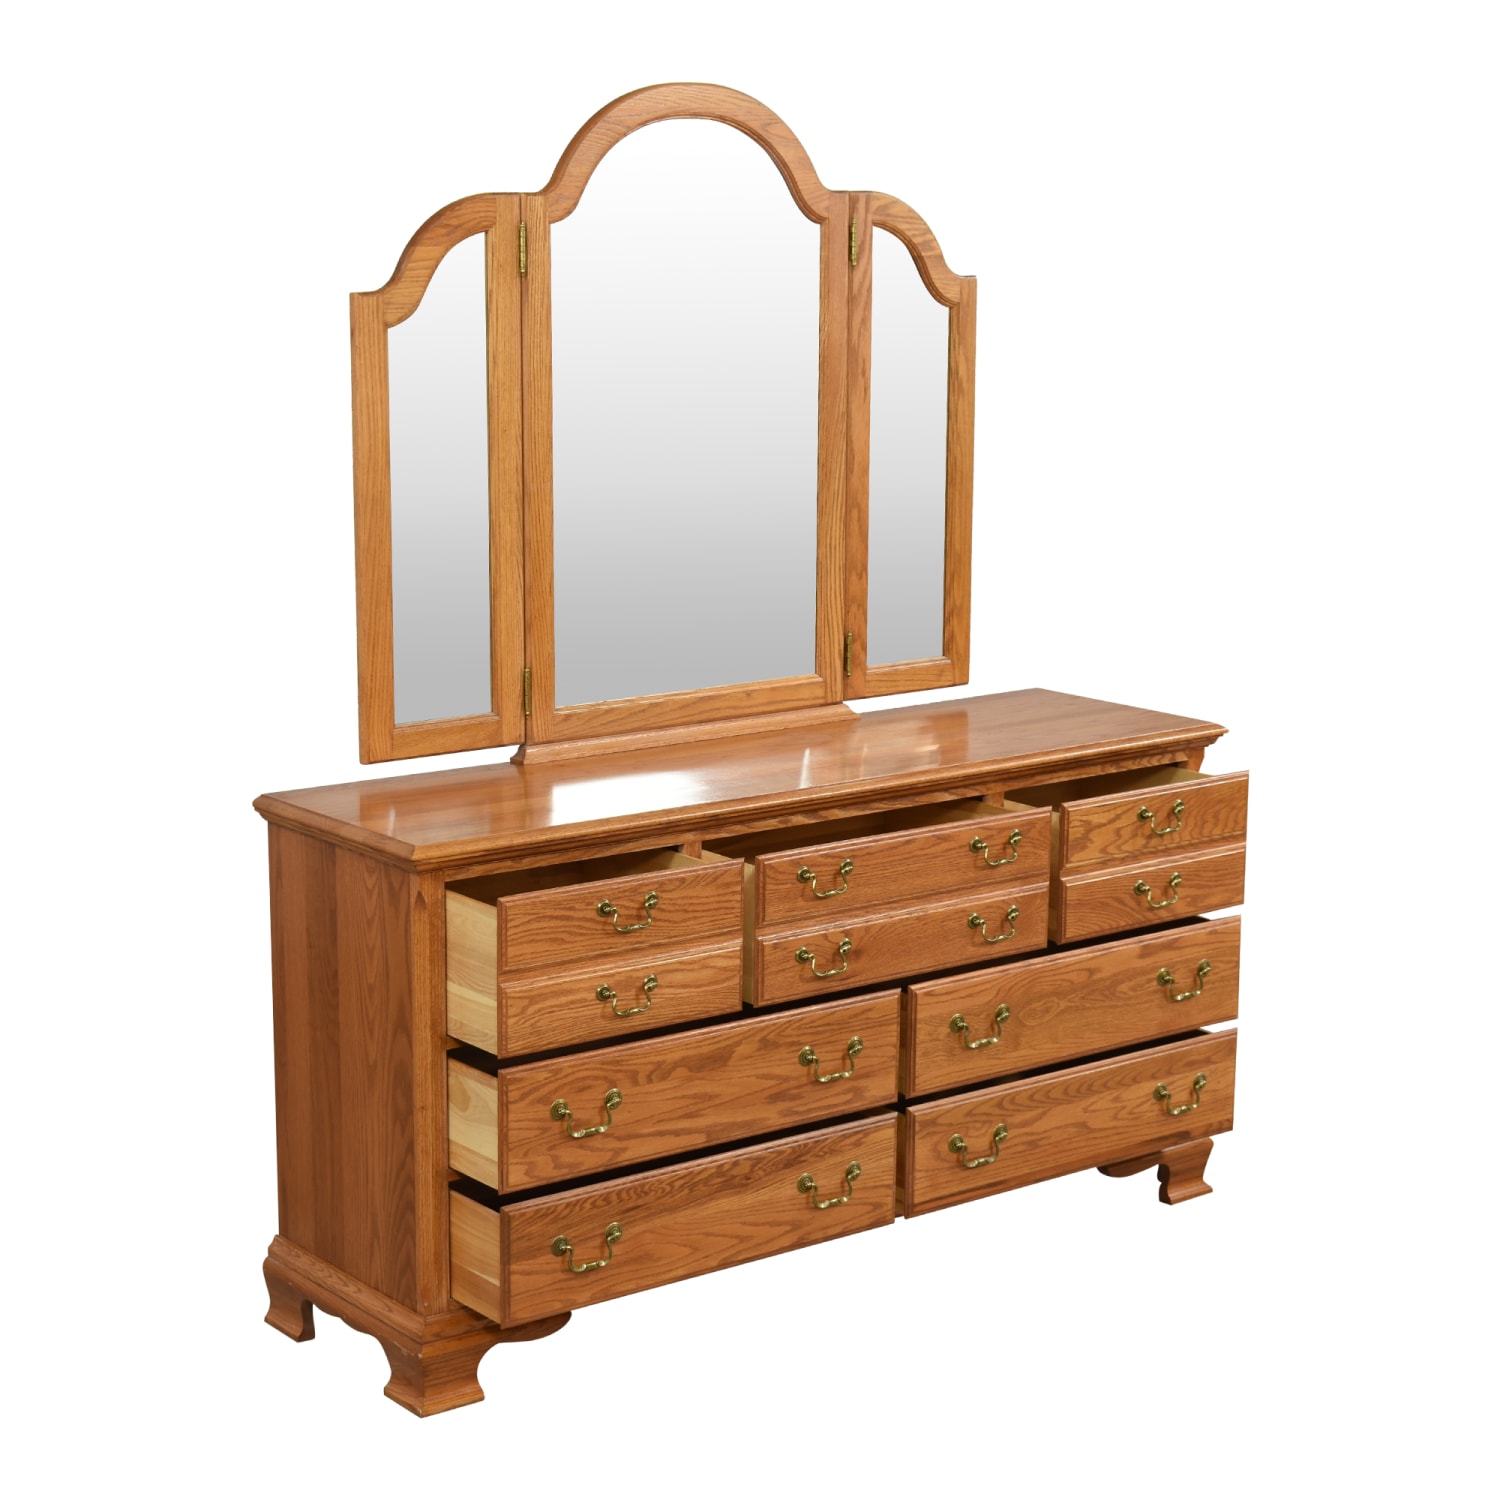 Pennsylvania House Pennsylvania House Dresser with Trifold Mirror  Dressers